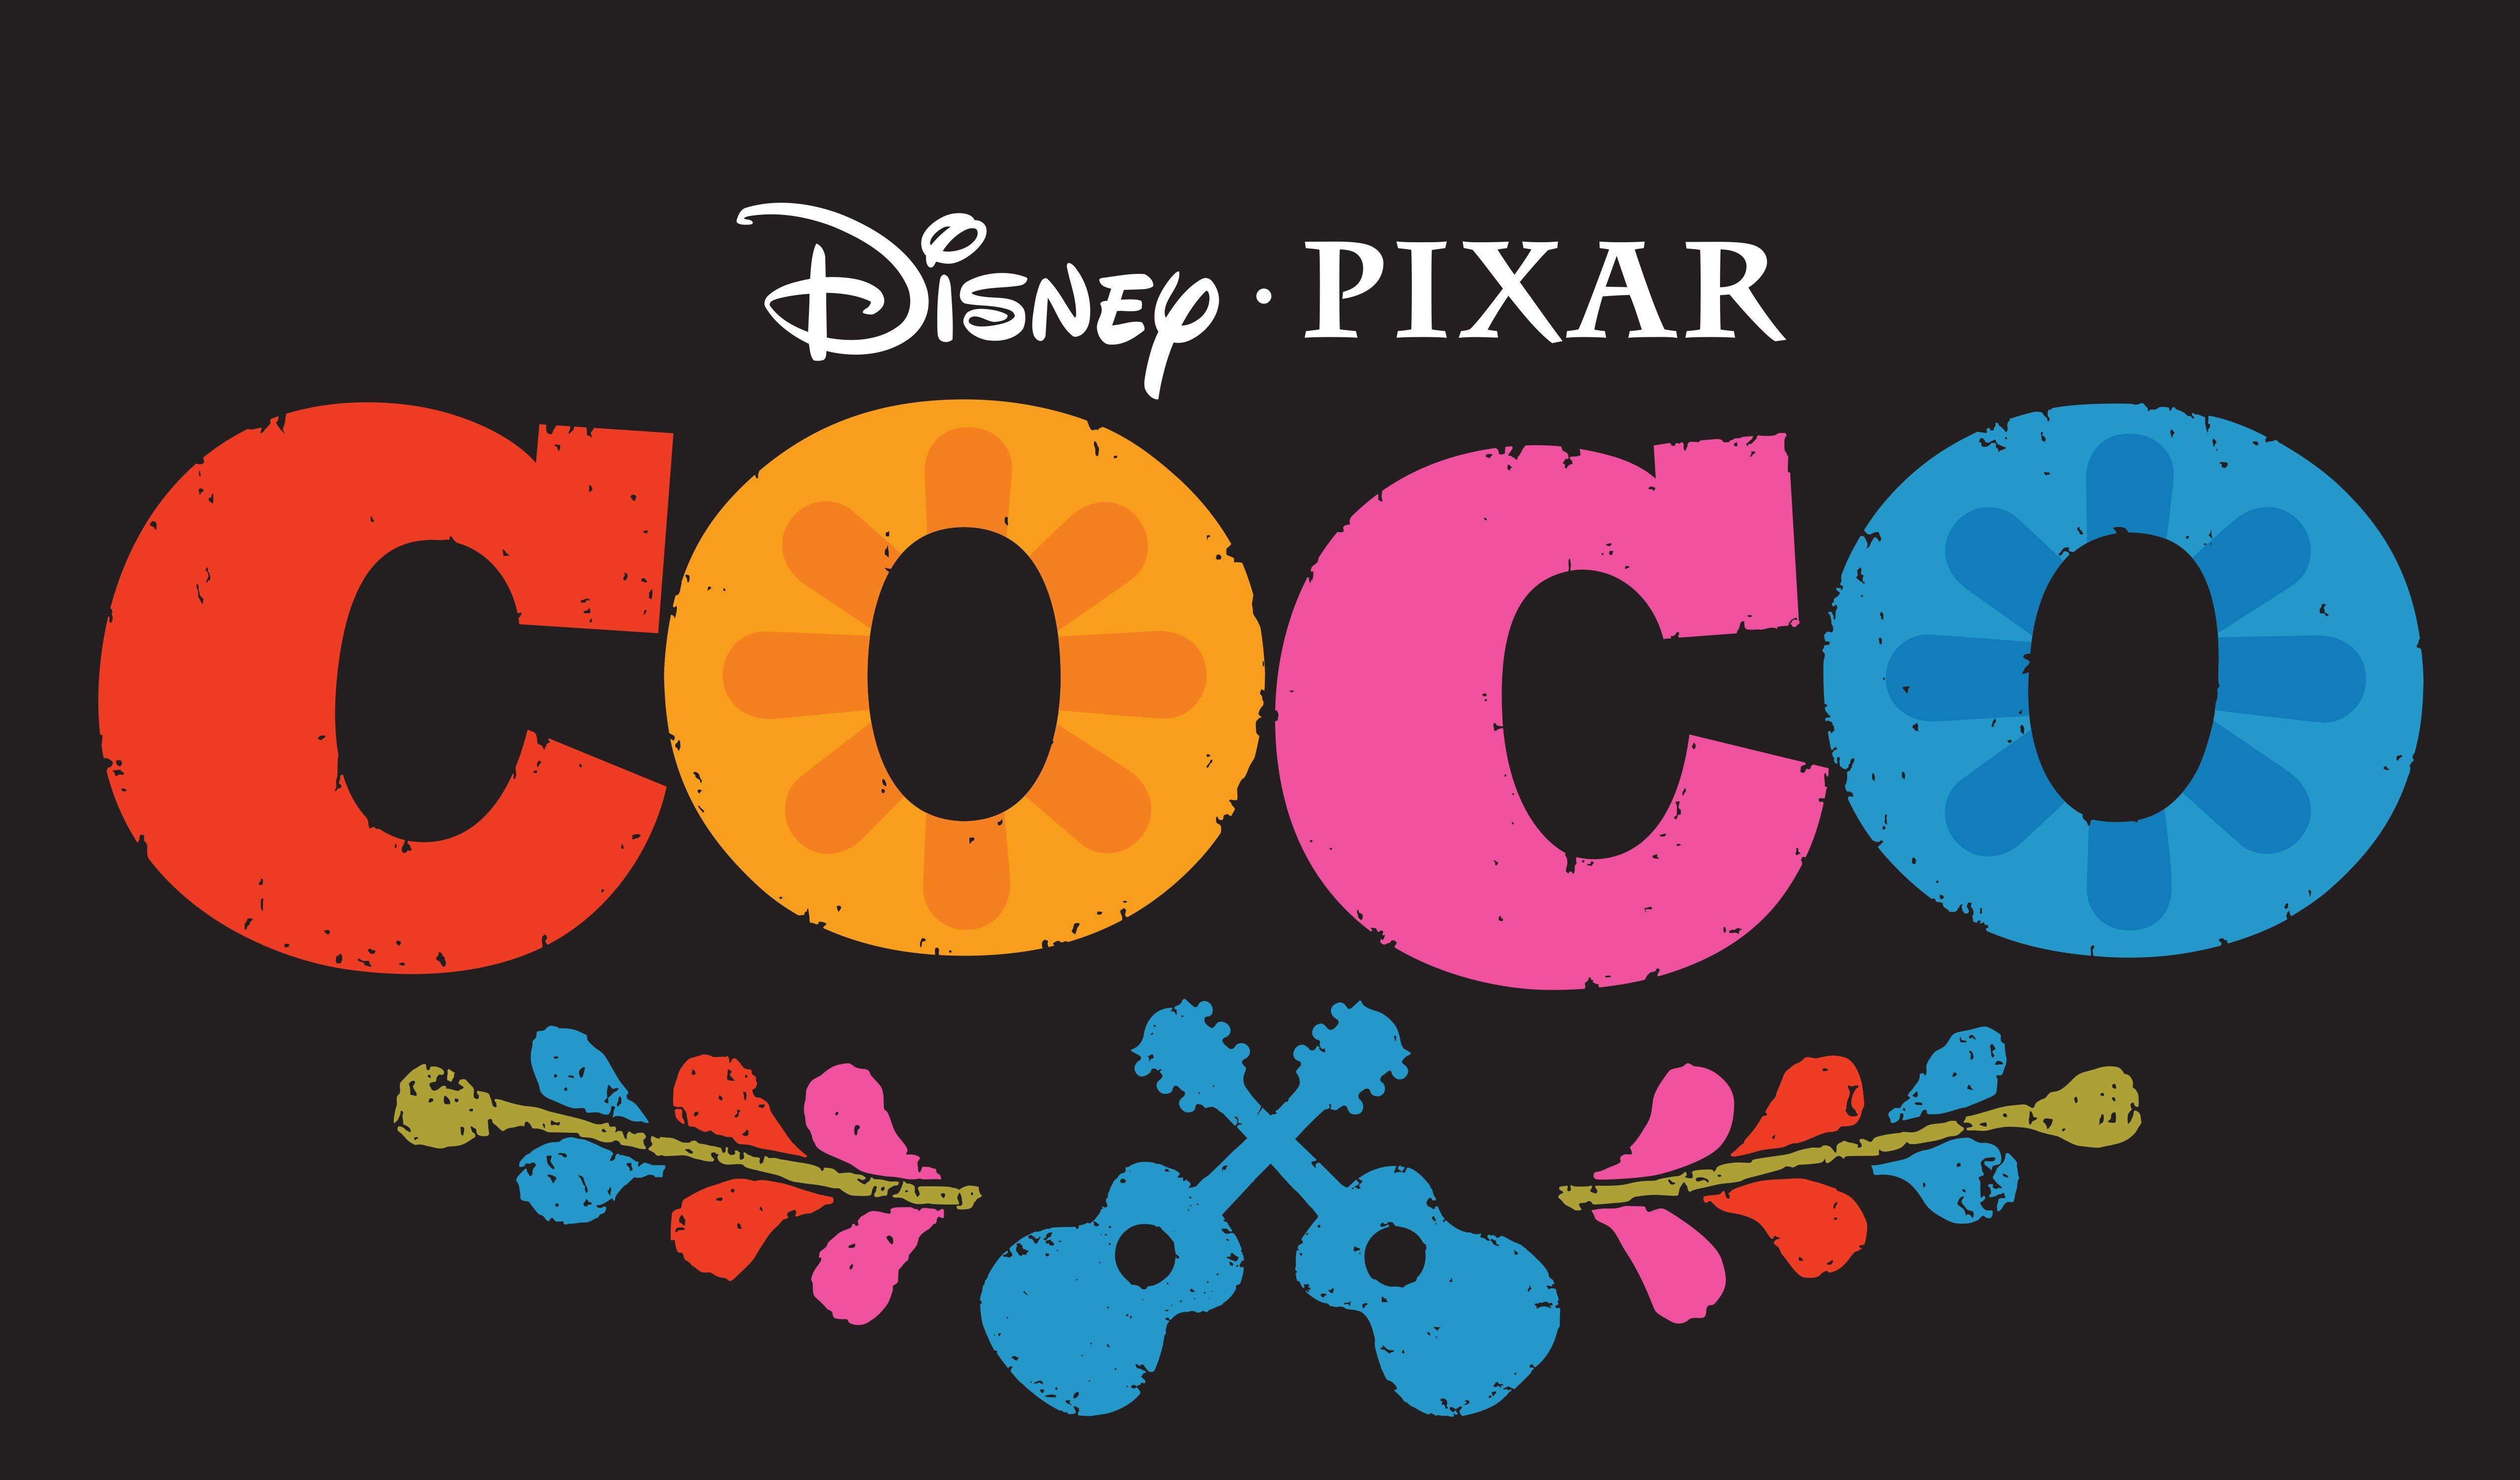 Coco Disney 2017 Movie